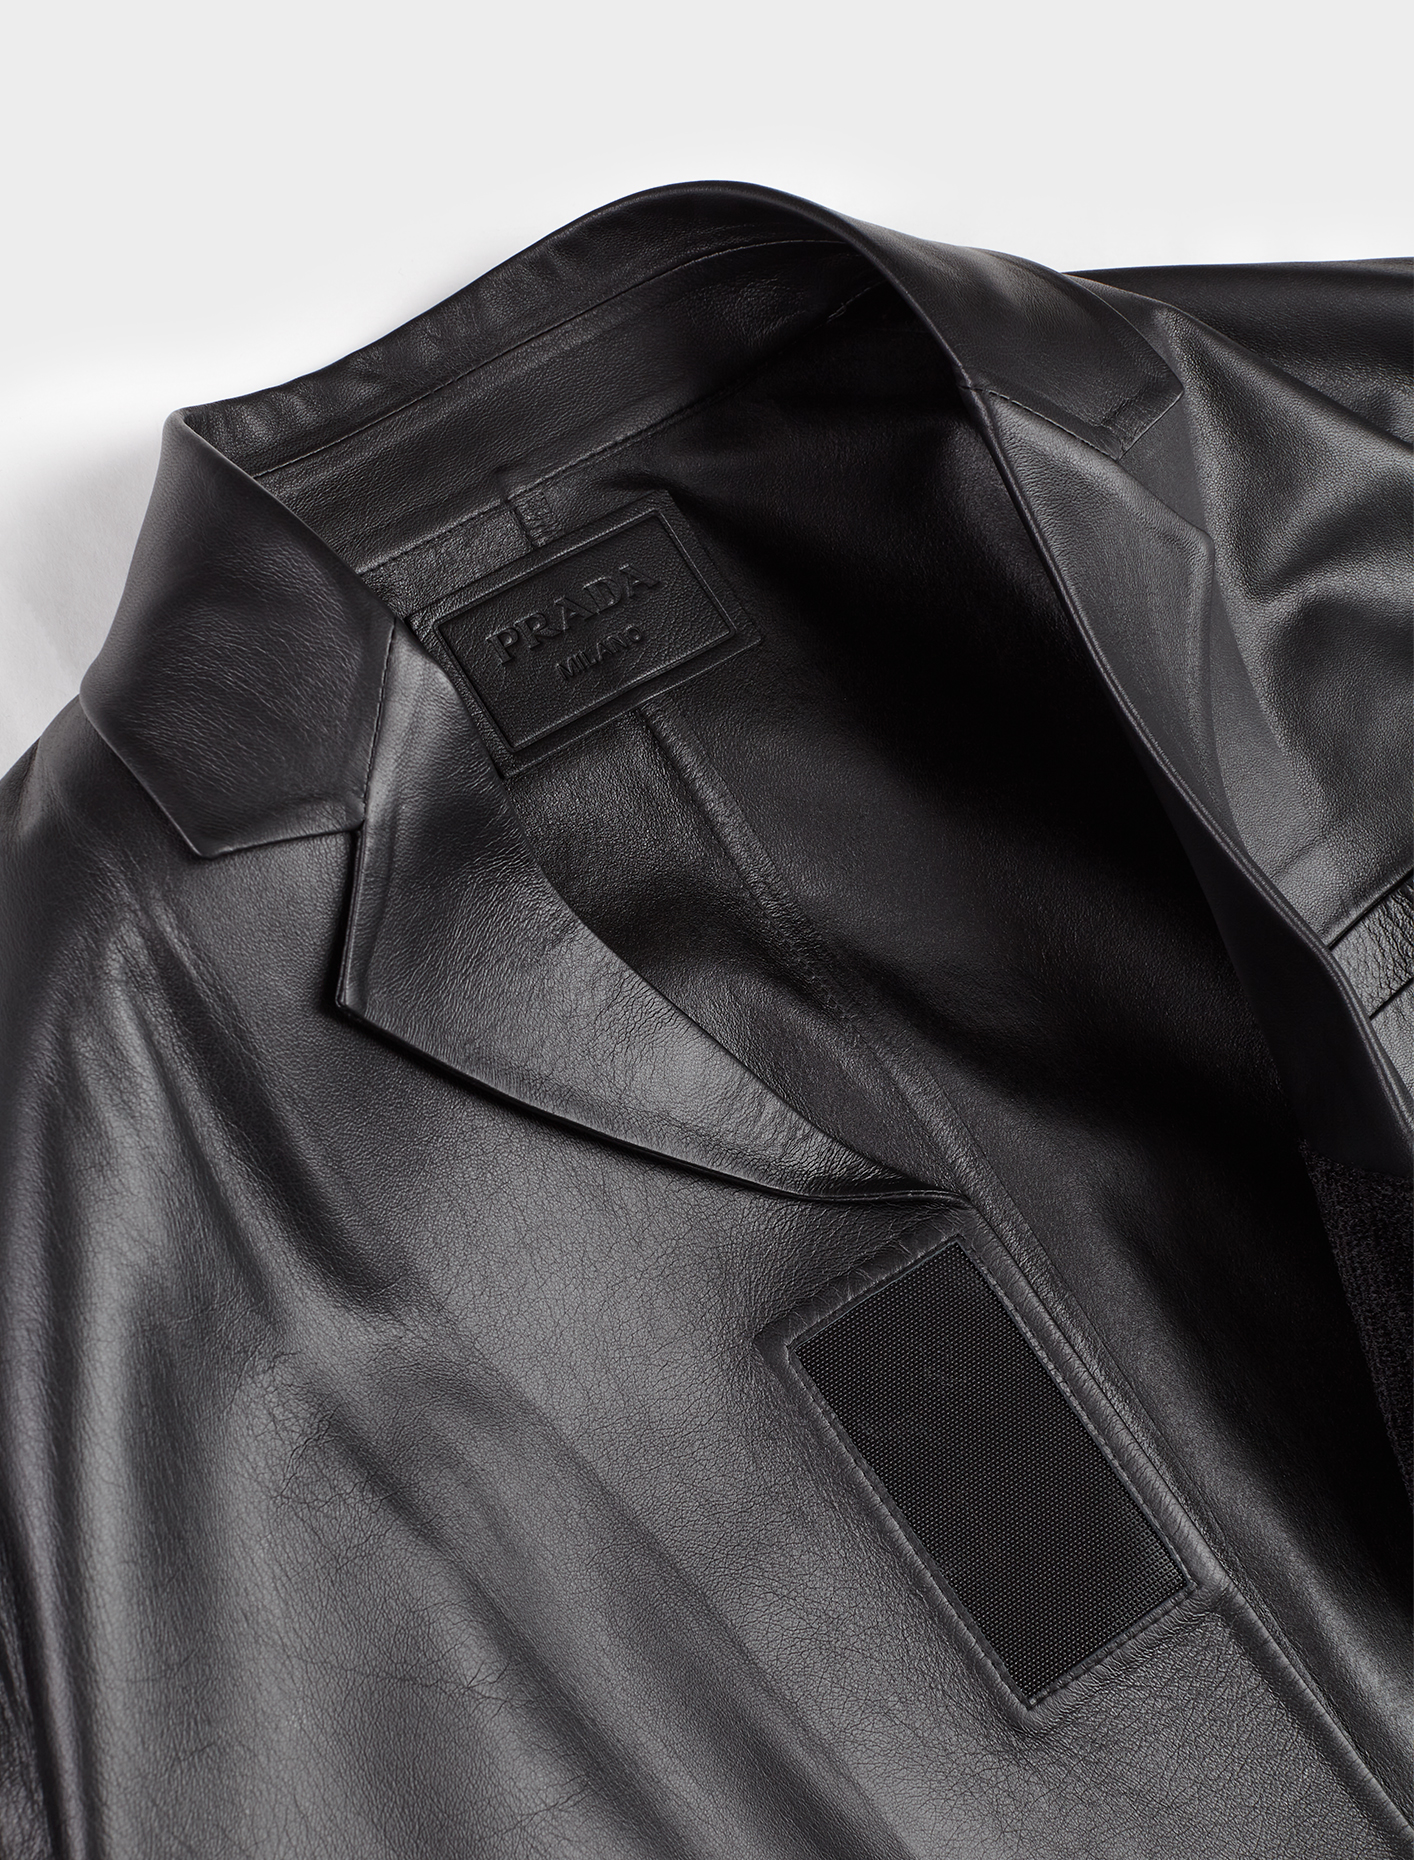 Prada Nappa Leather Blouson Jacket in Black | Voo Store Berlin ...